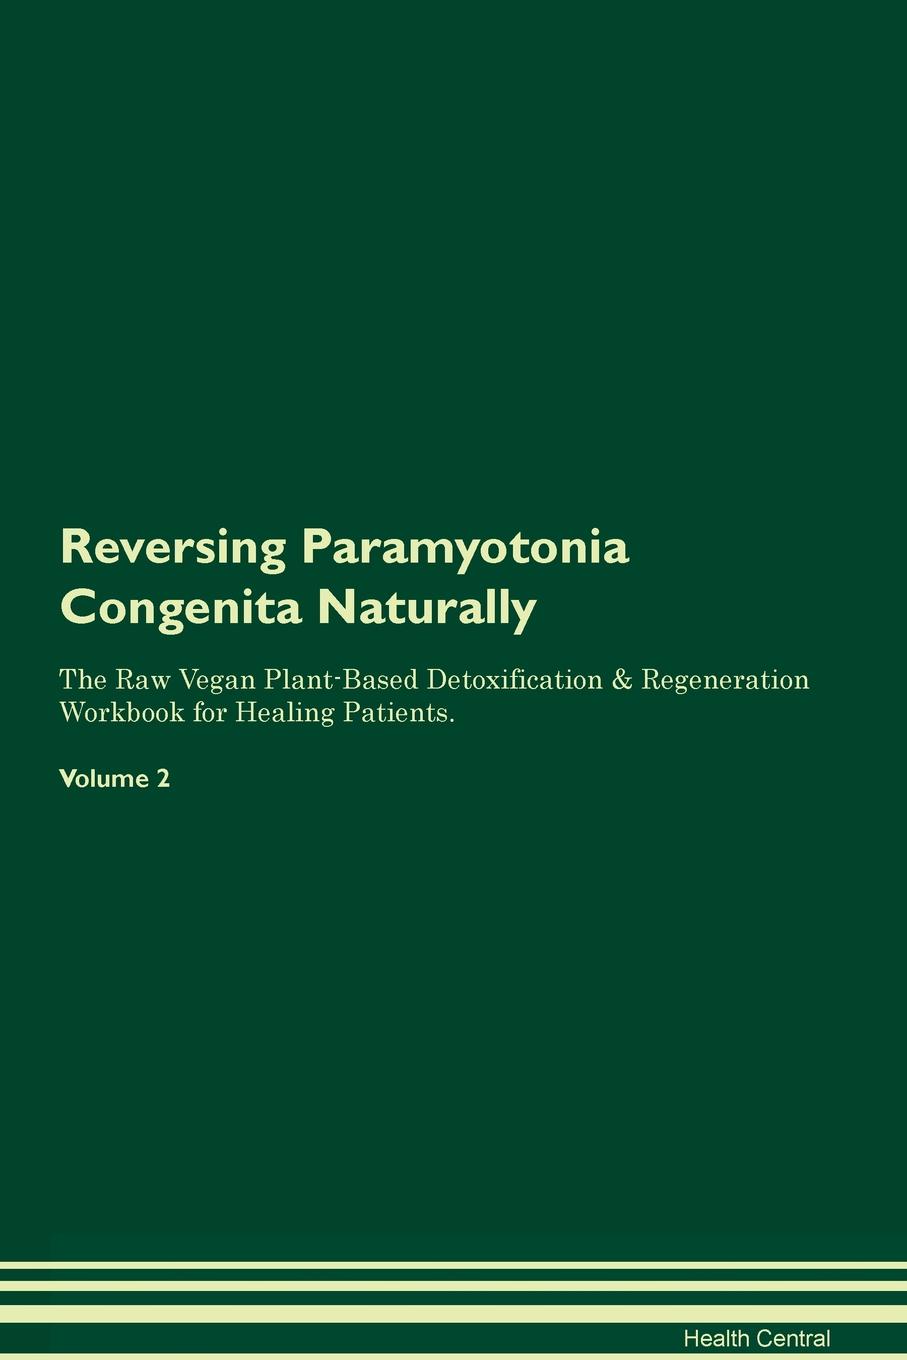 Reversing Paramyotonia Congenita Naturally The Raw Vegan Plant-Based Detoxification & Regeneration Workbook for Healing Patients. Volume 2